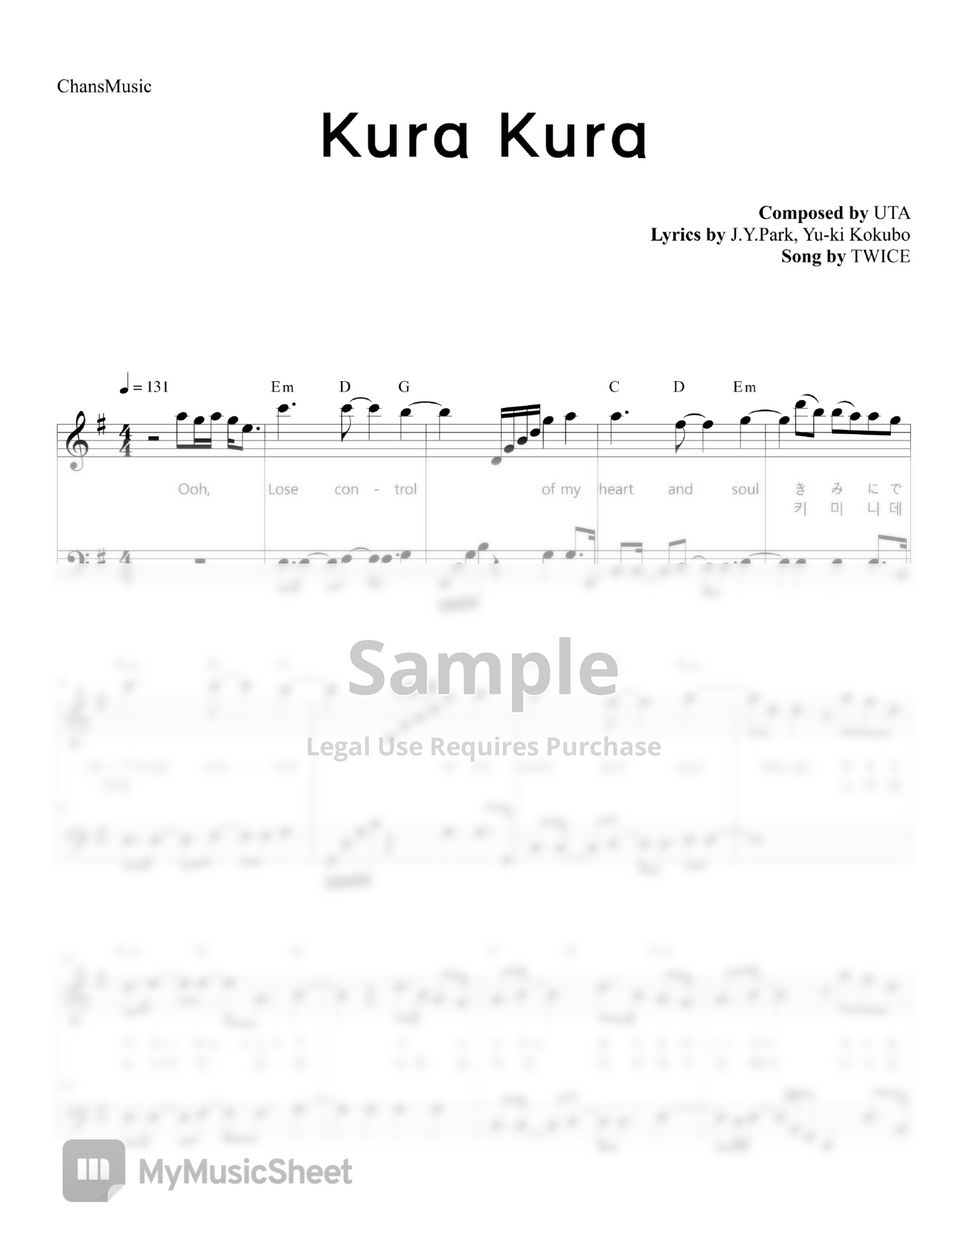 TWICE(트와이스) - Kura Kura (Easy Version) by ChansMusic